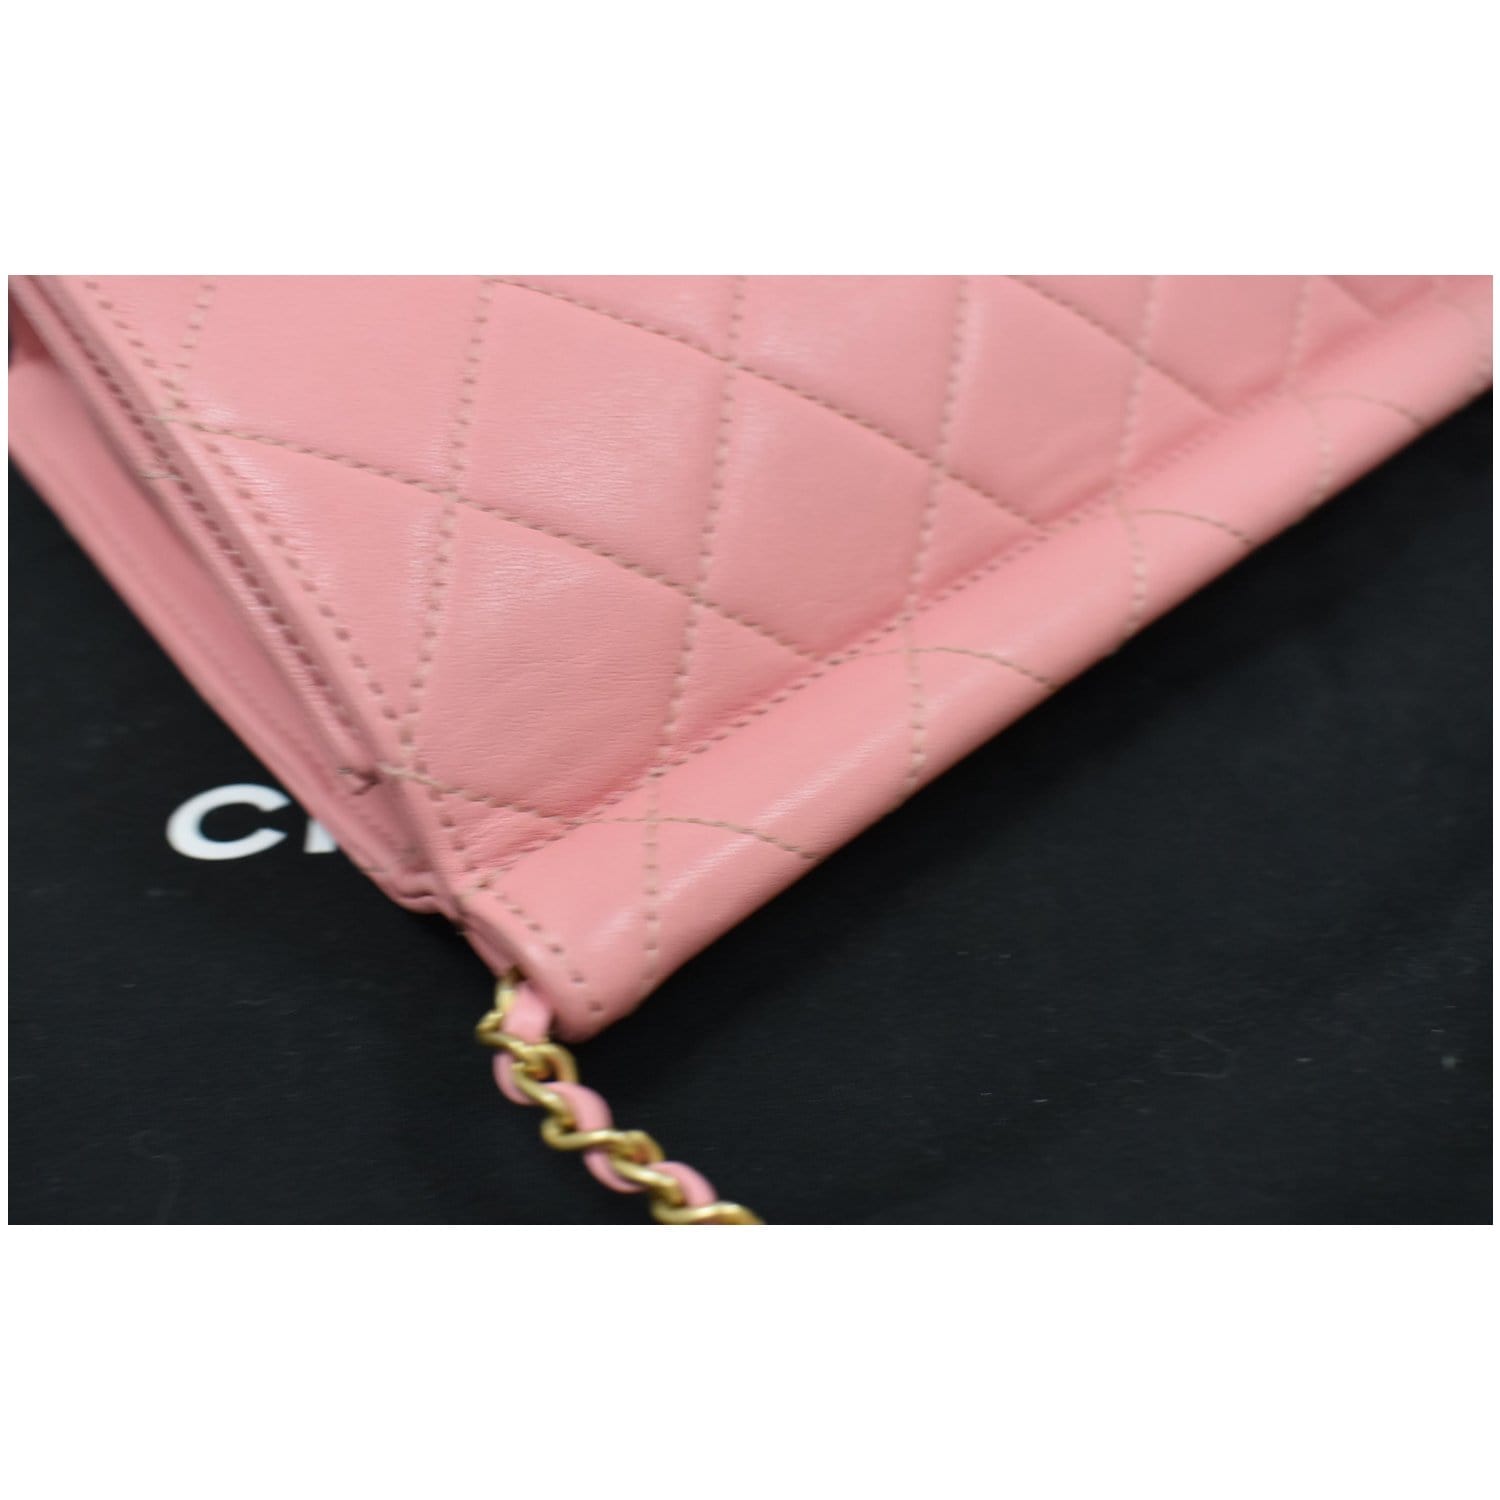 Chanel, Pink Snow Globe Perfume Shopping Bag